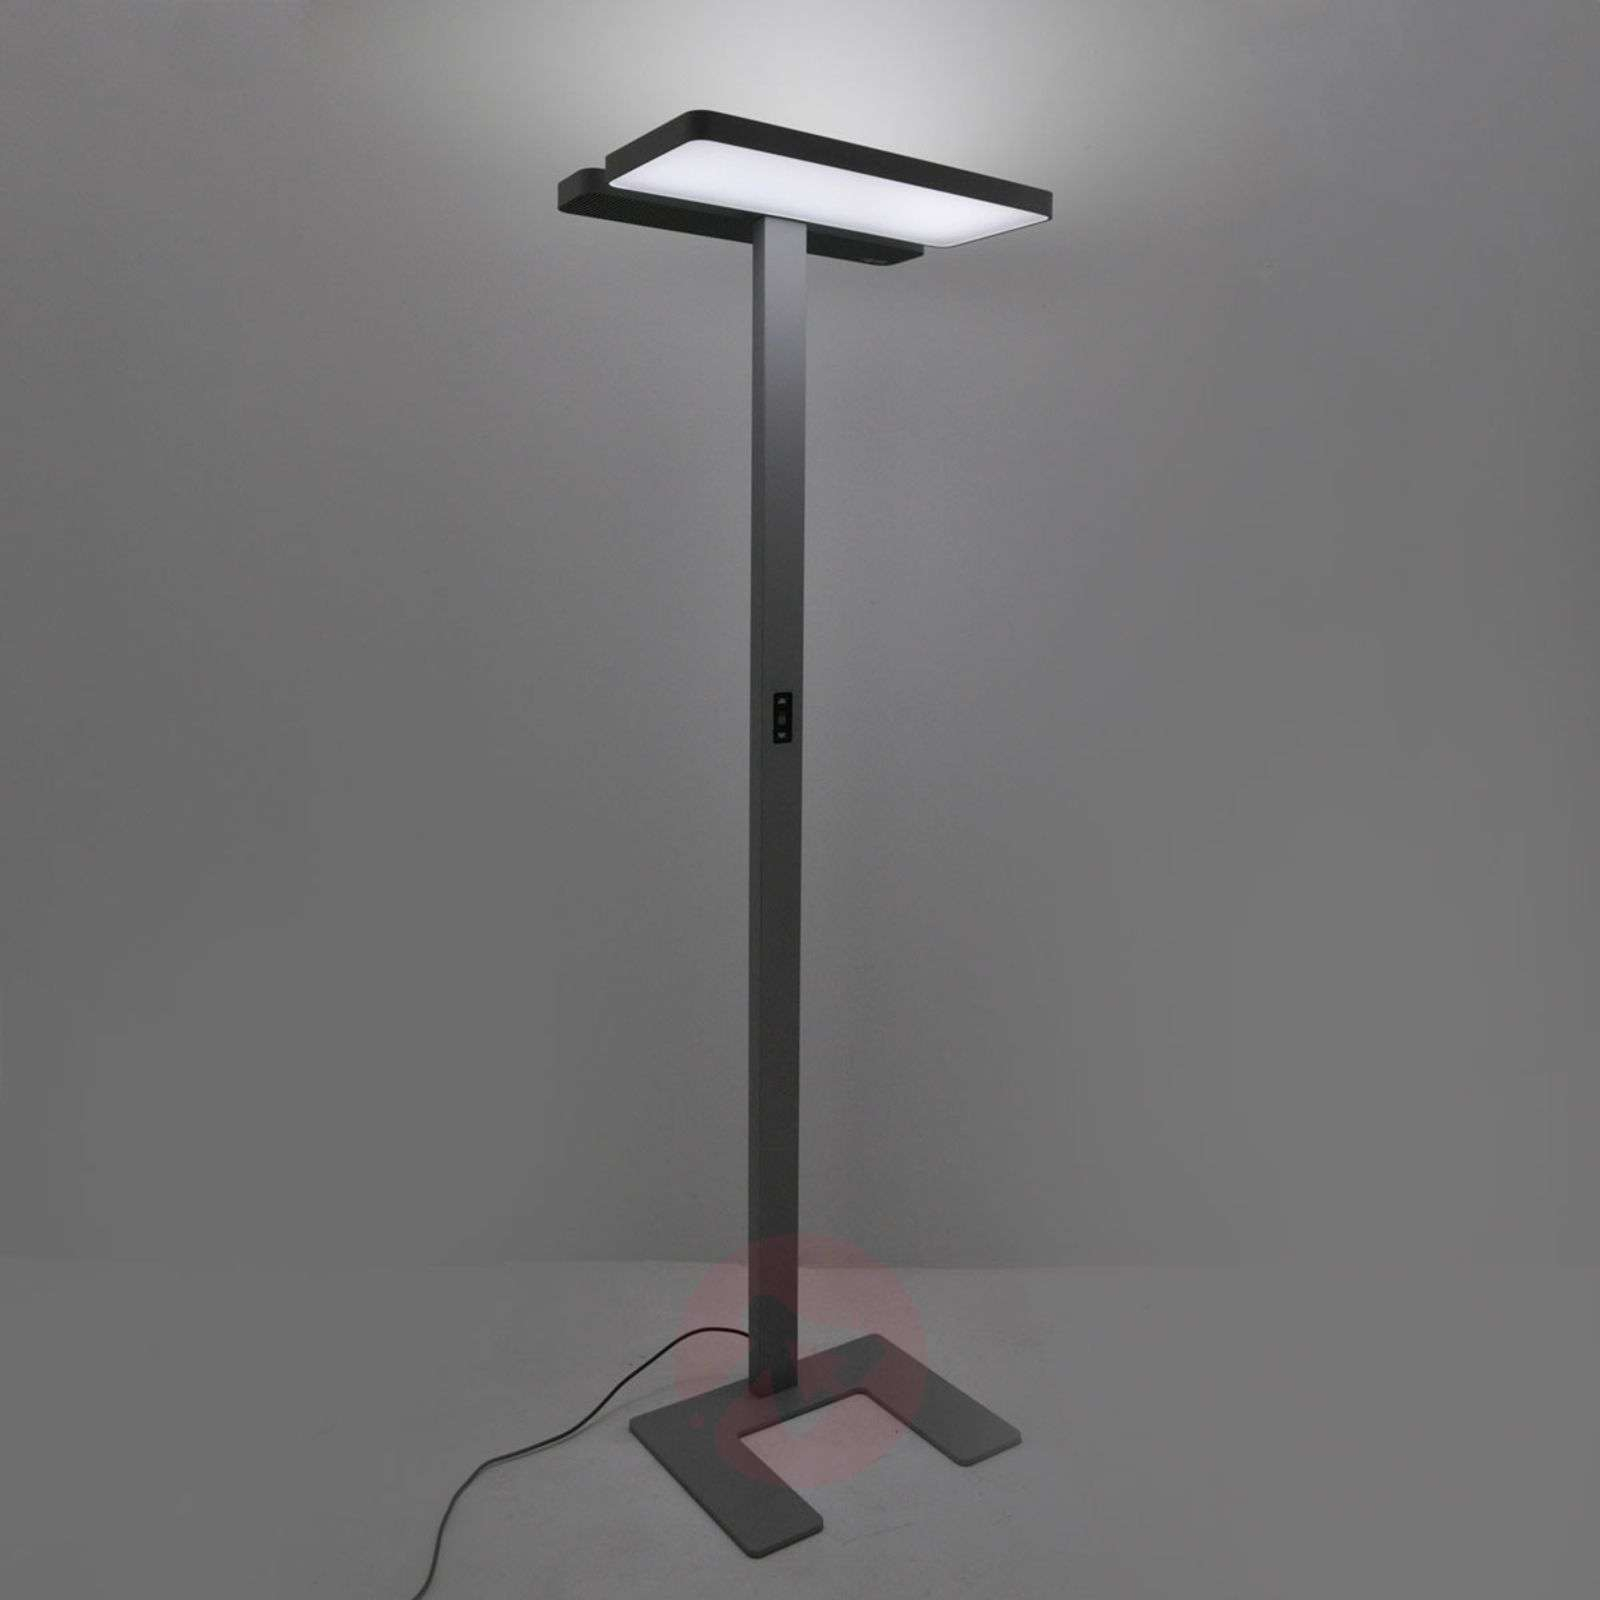 Aila Office Led Floor Lamp Daylight Sensor 4000k regarding size 1600 X 1600